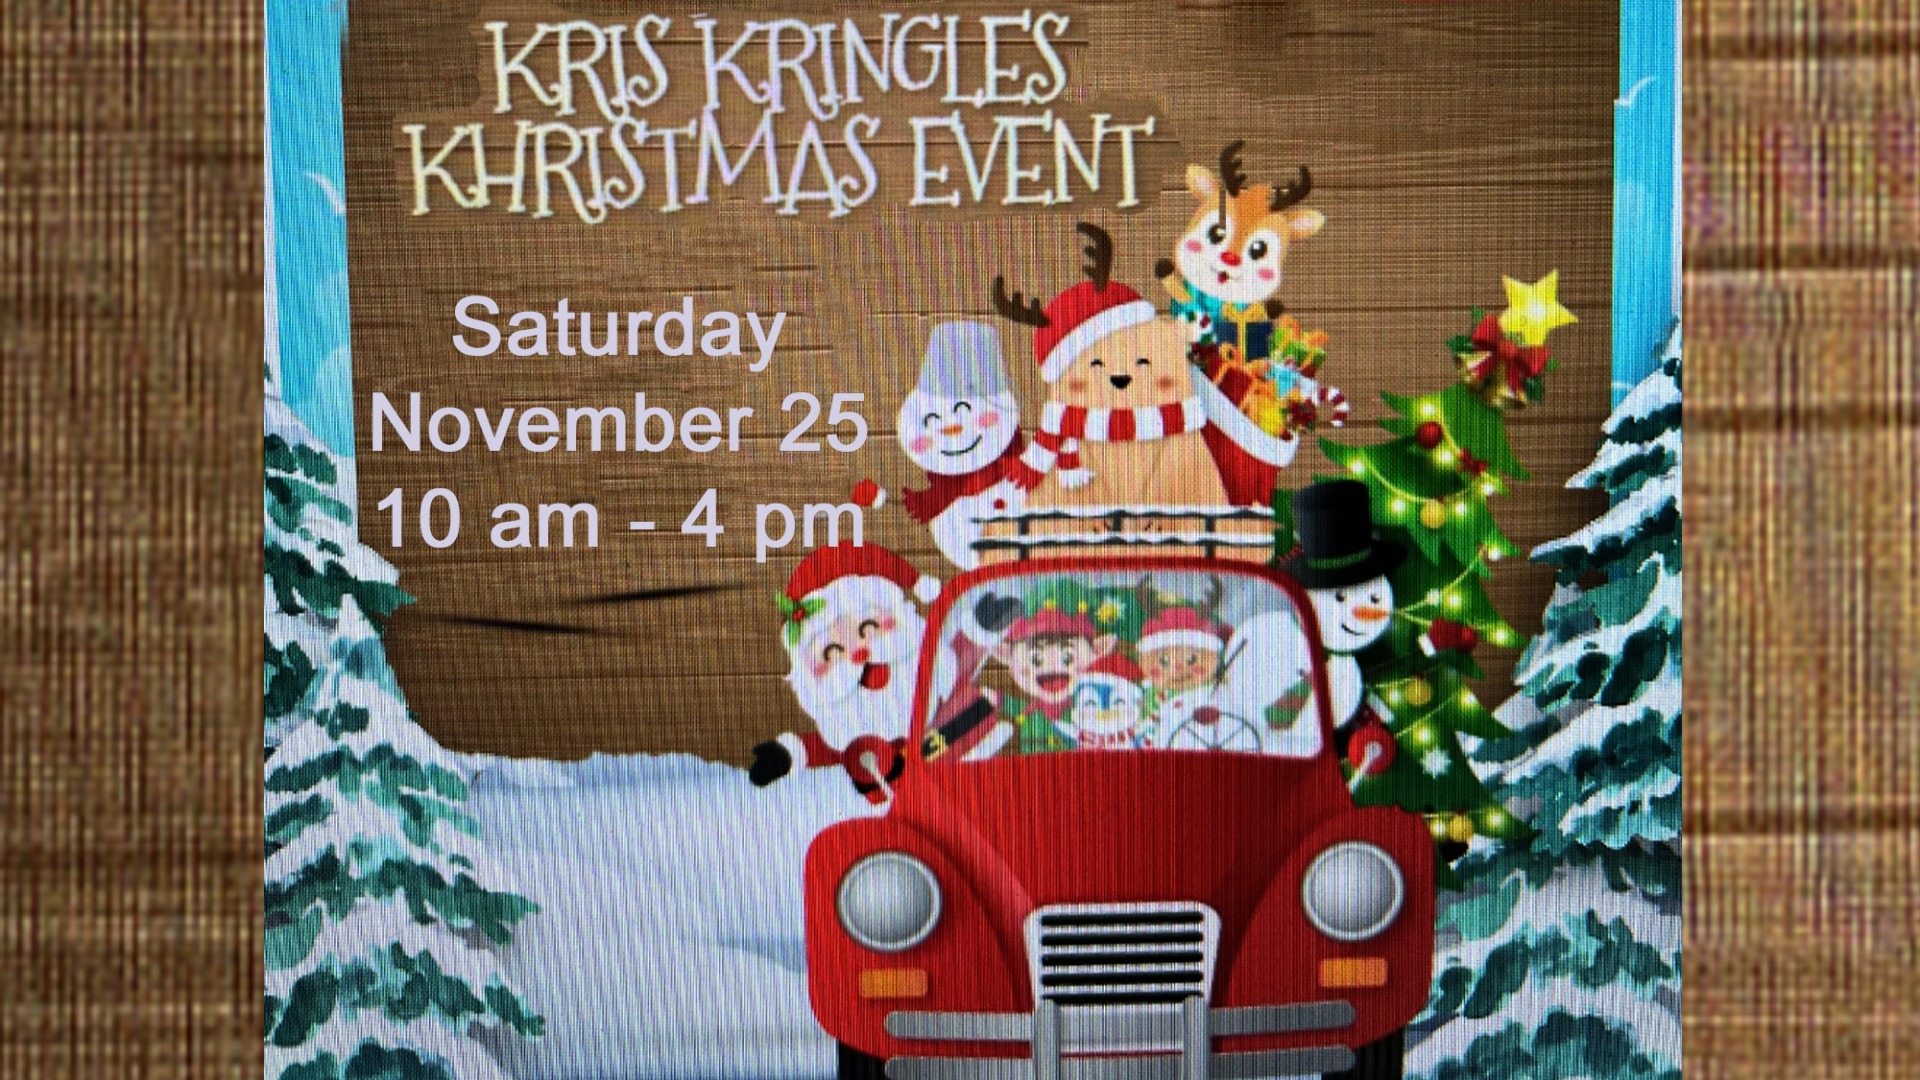 Kris Kringle Khristmas Event